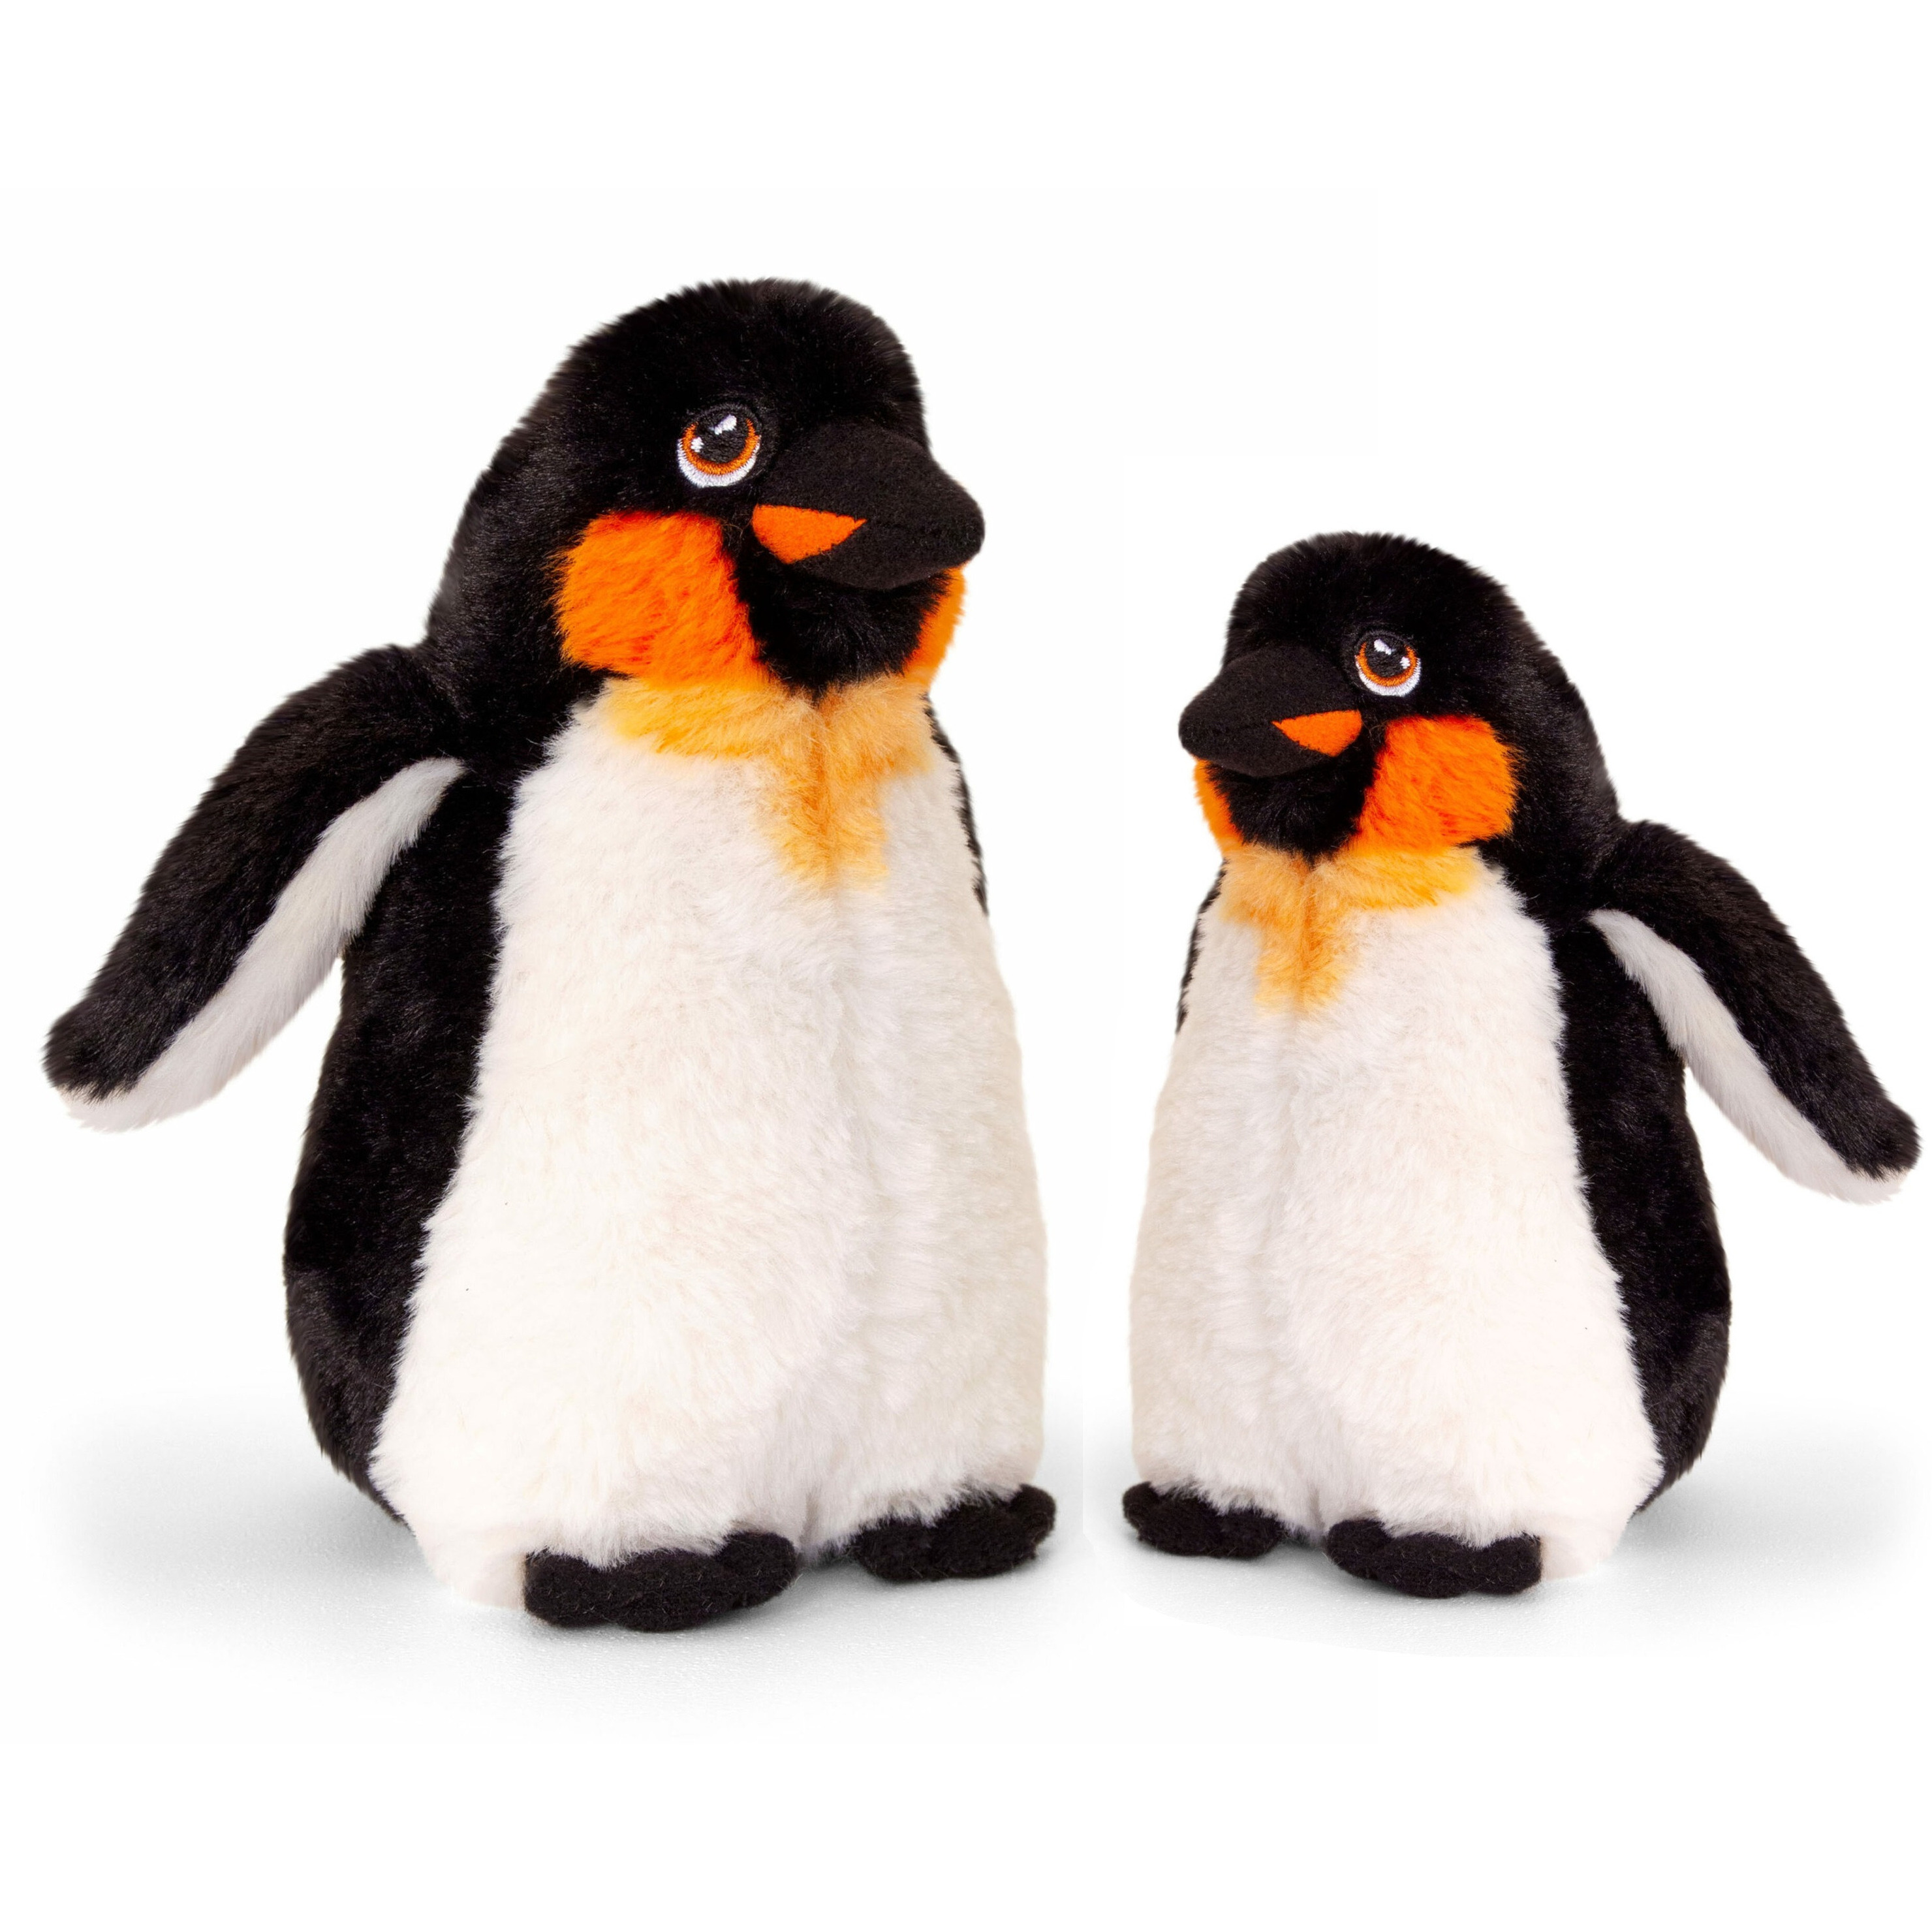 Merkloos Keel Toys pluche Keizer pinguin knuffeldieren - wit/zwart - staand - 20 en 25 cm -